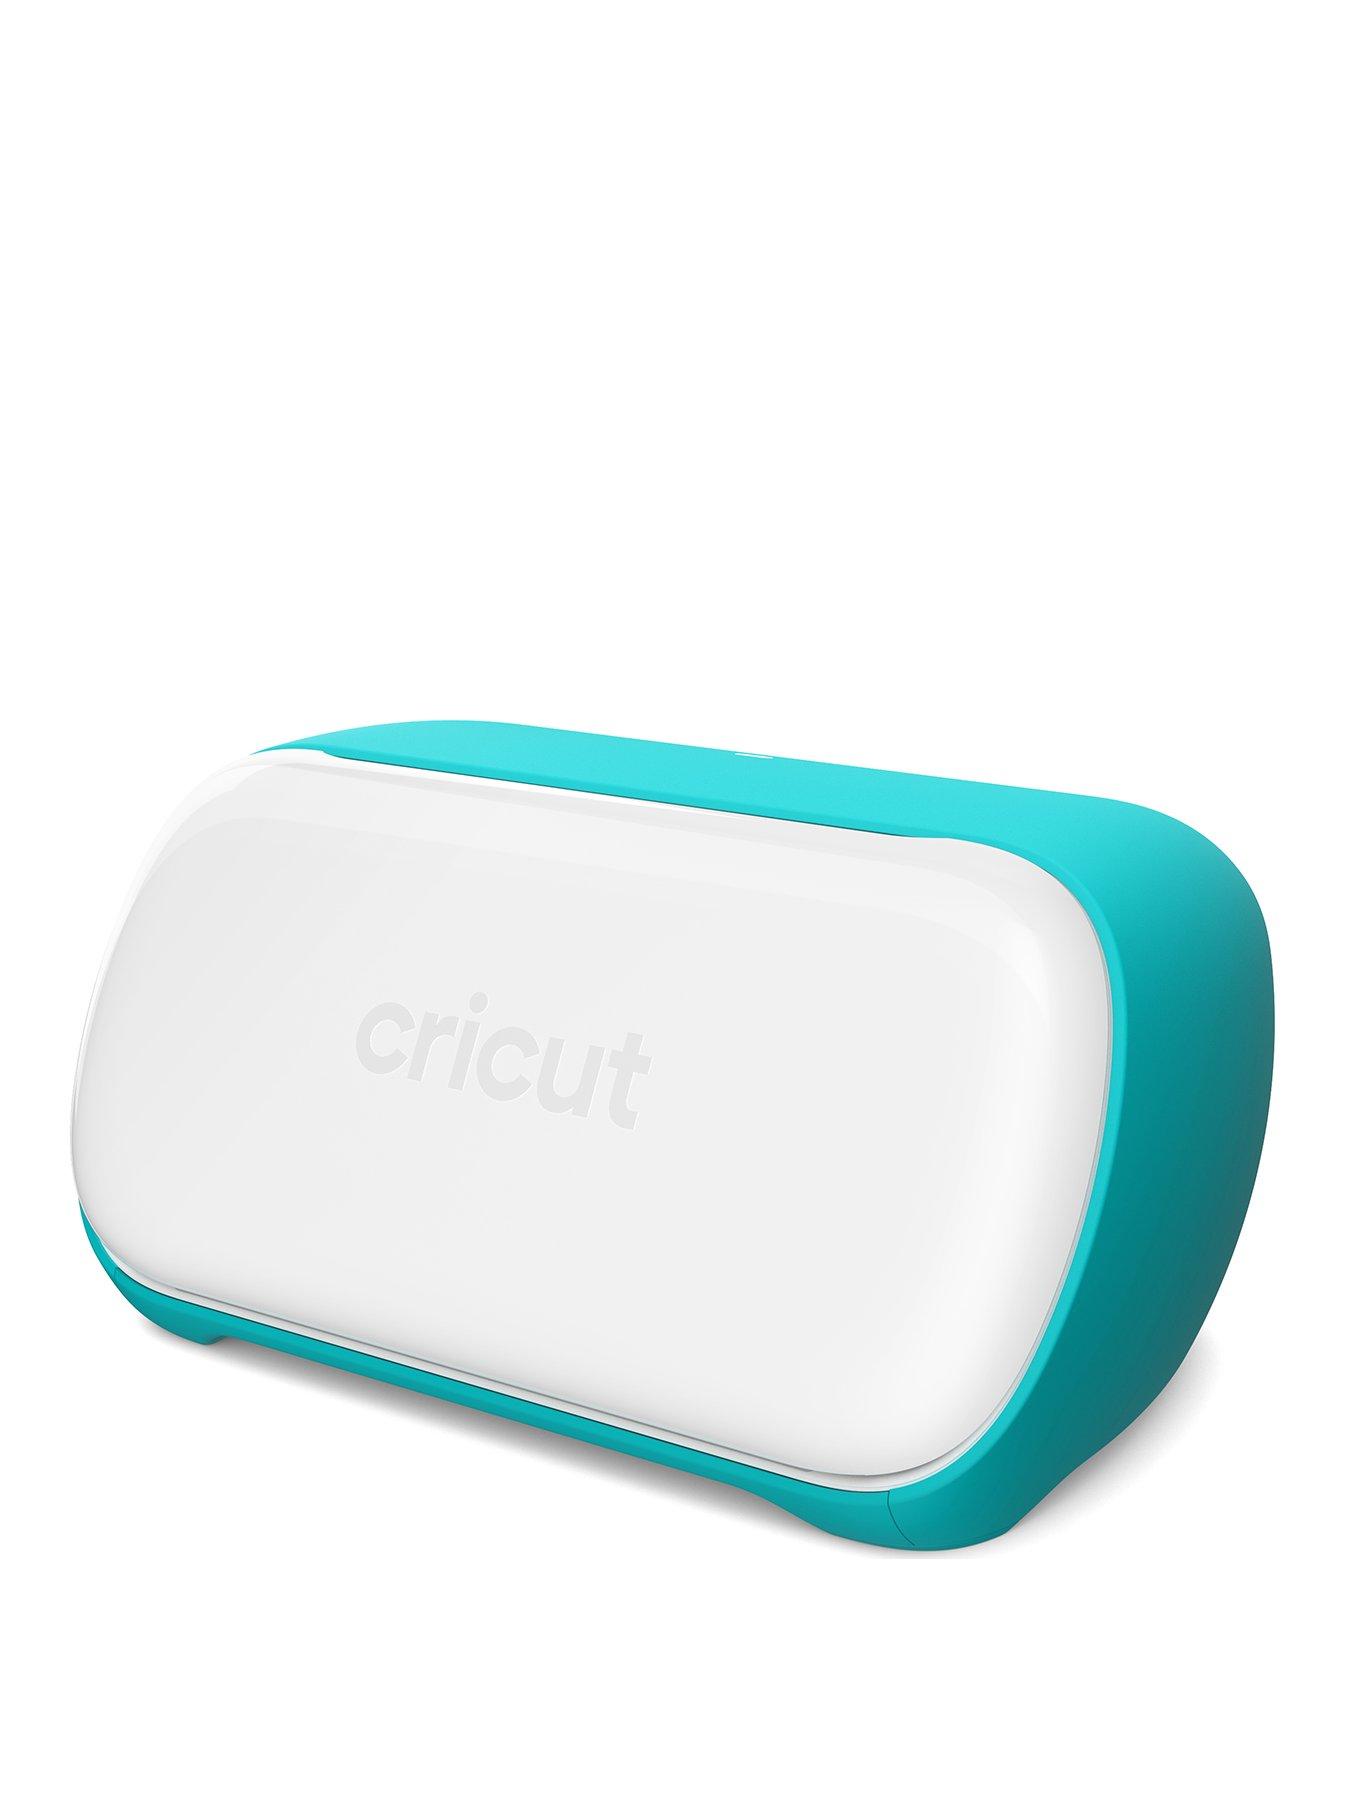 Jump right into making with the all-new Cricut Joy app – Cricut